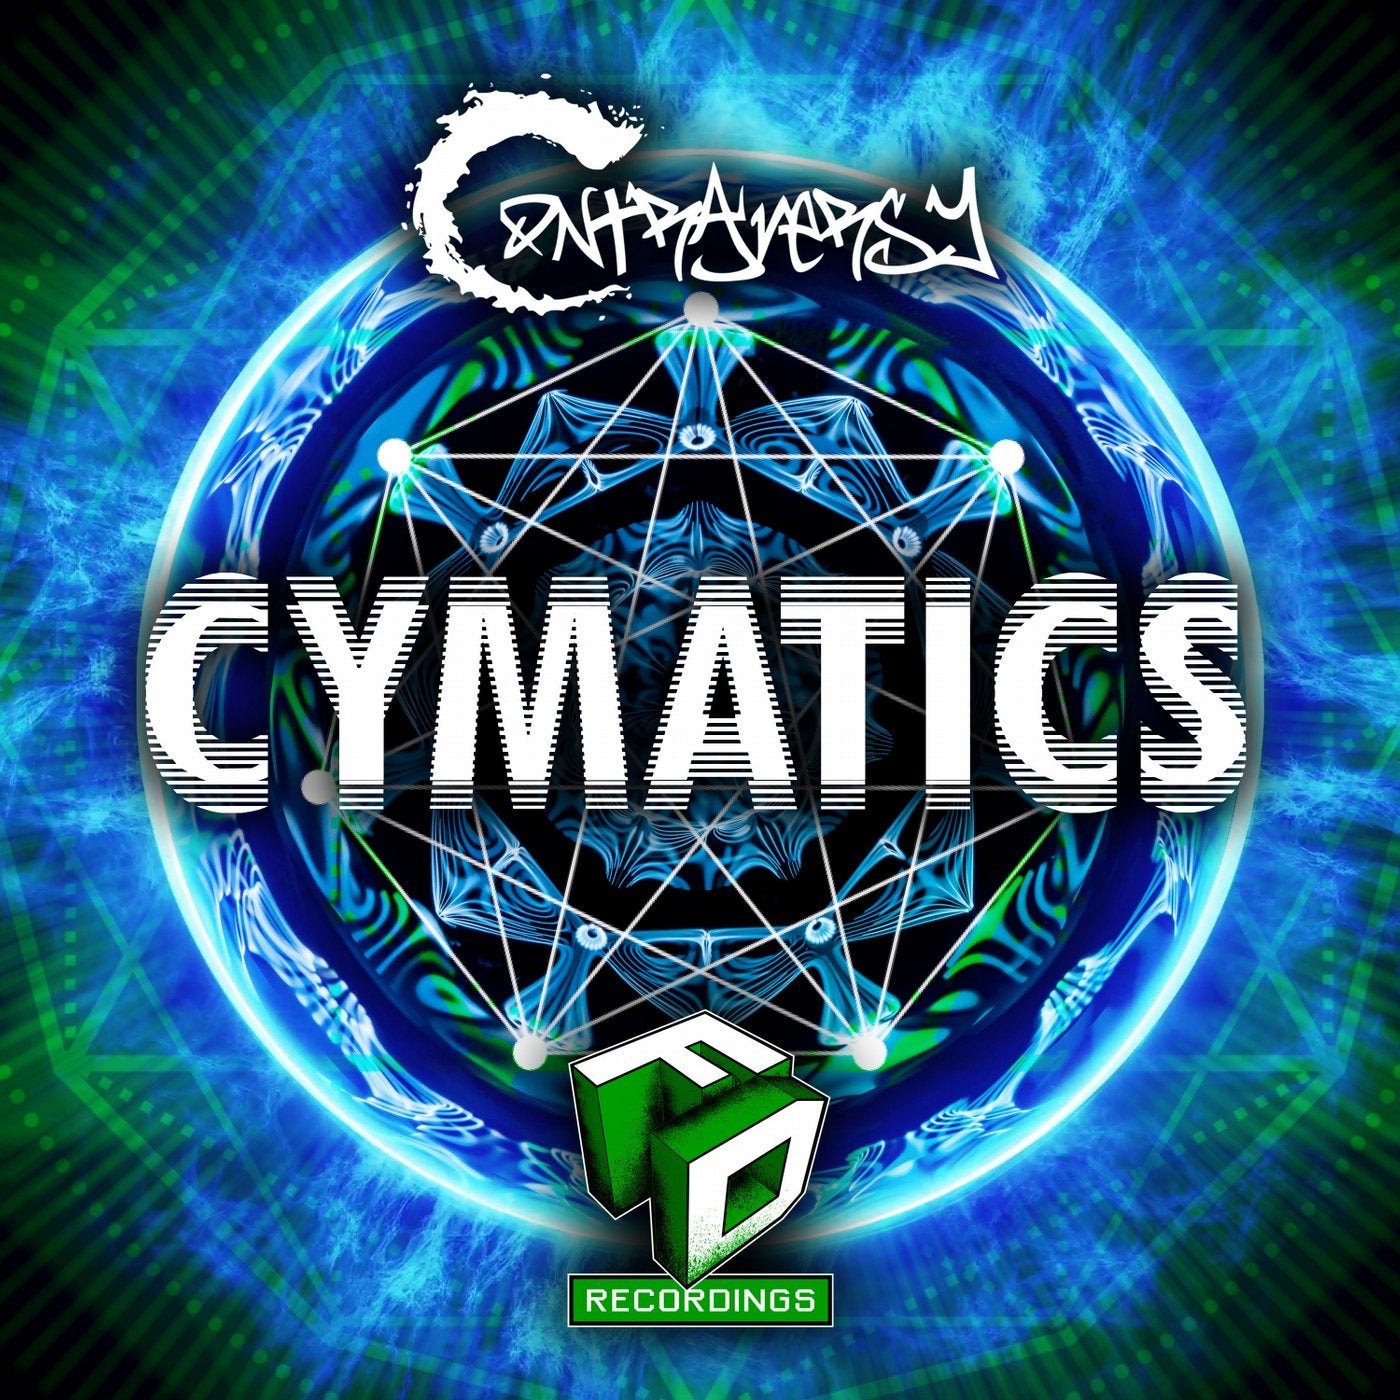 Cymatics